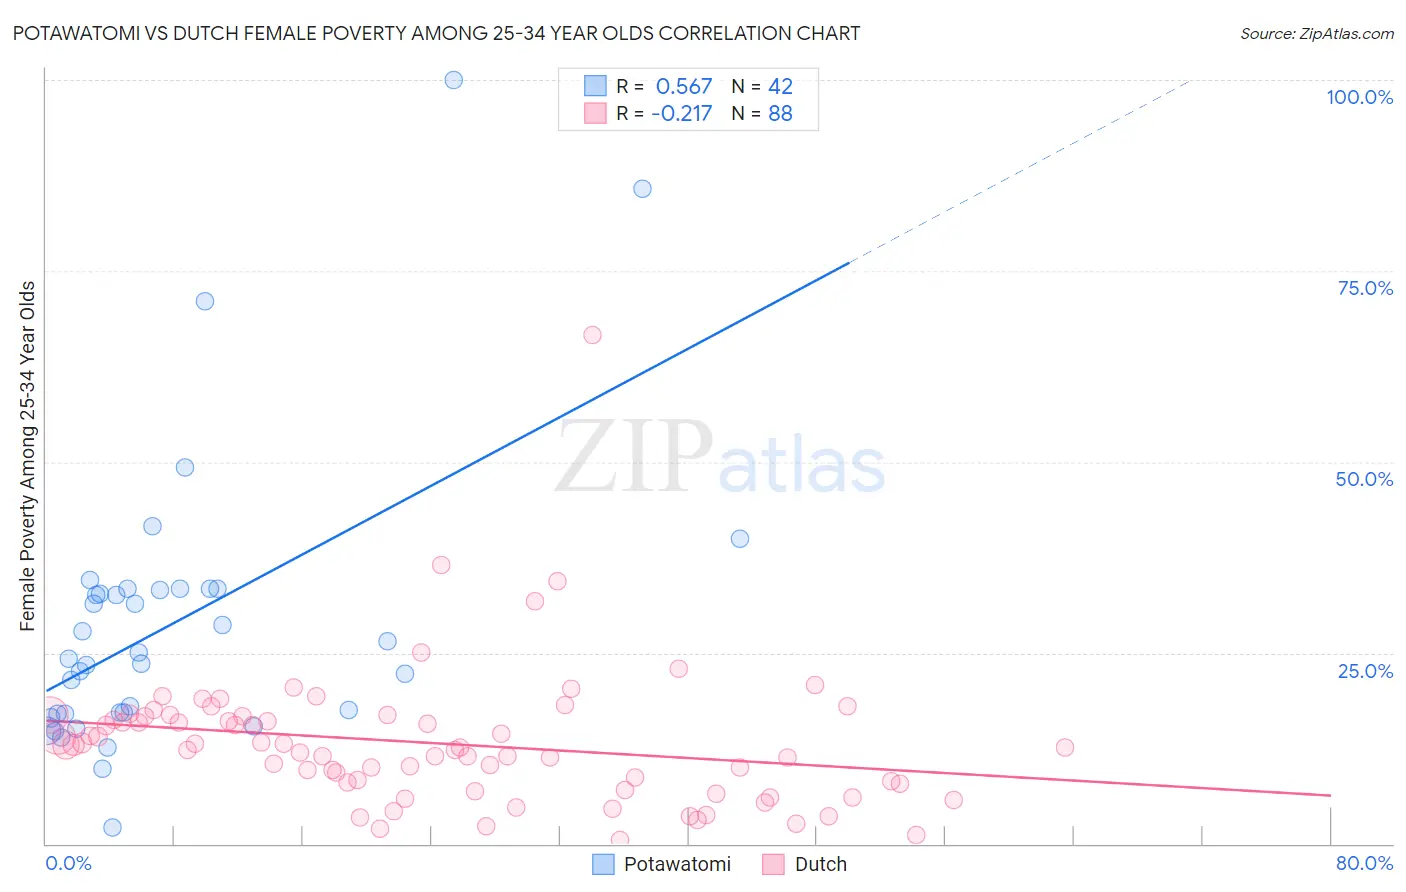 Potawatomi vs Dutch Female Poverty Among 25-34 Year Olds